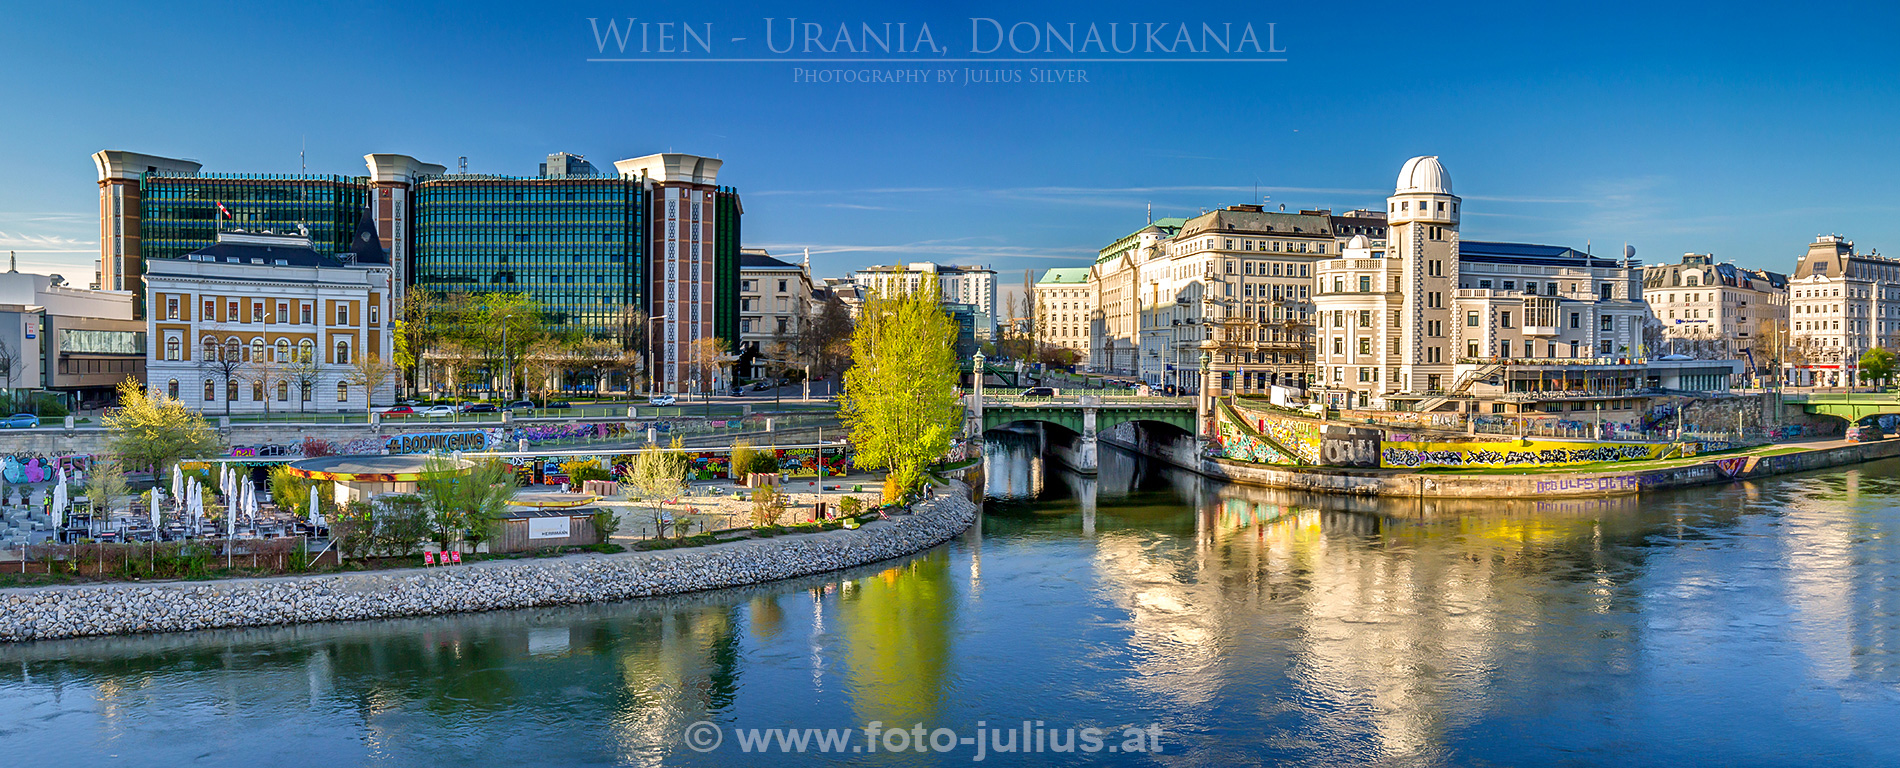 W6789a_Urania_Donaukanal_Wien.jpg, 910kB